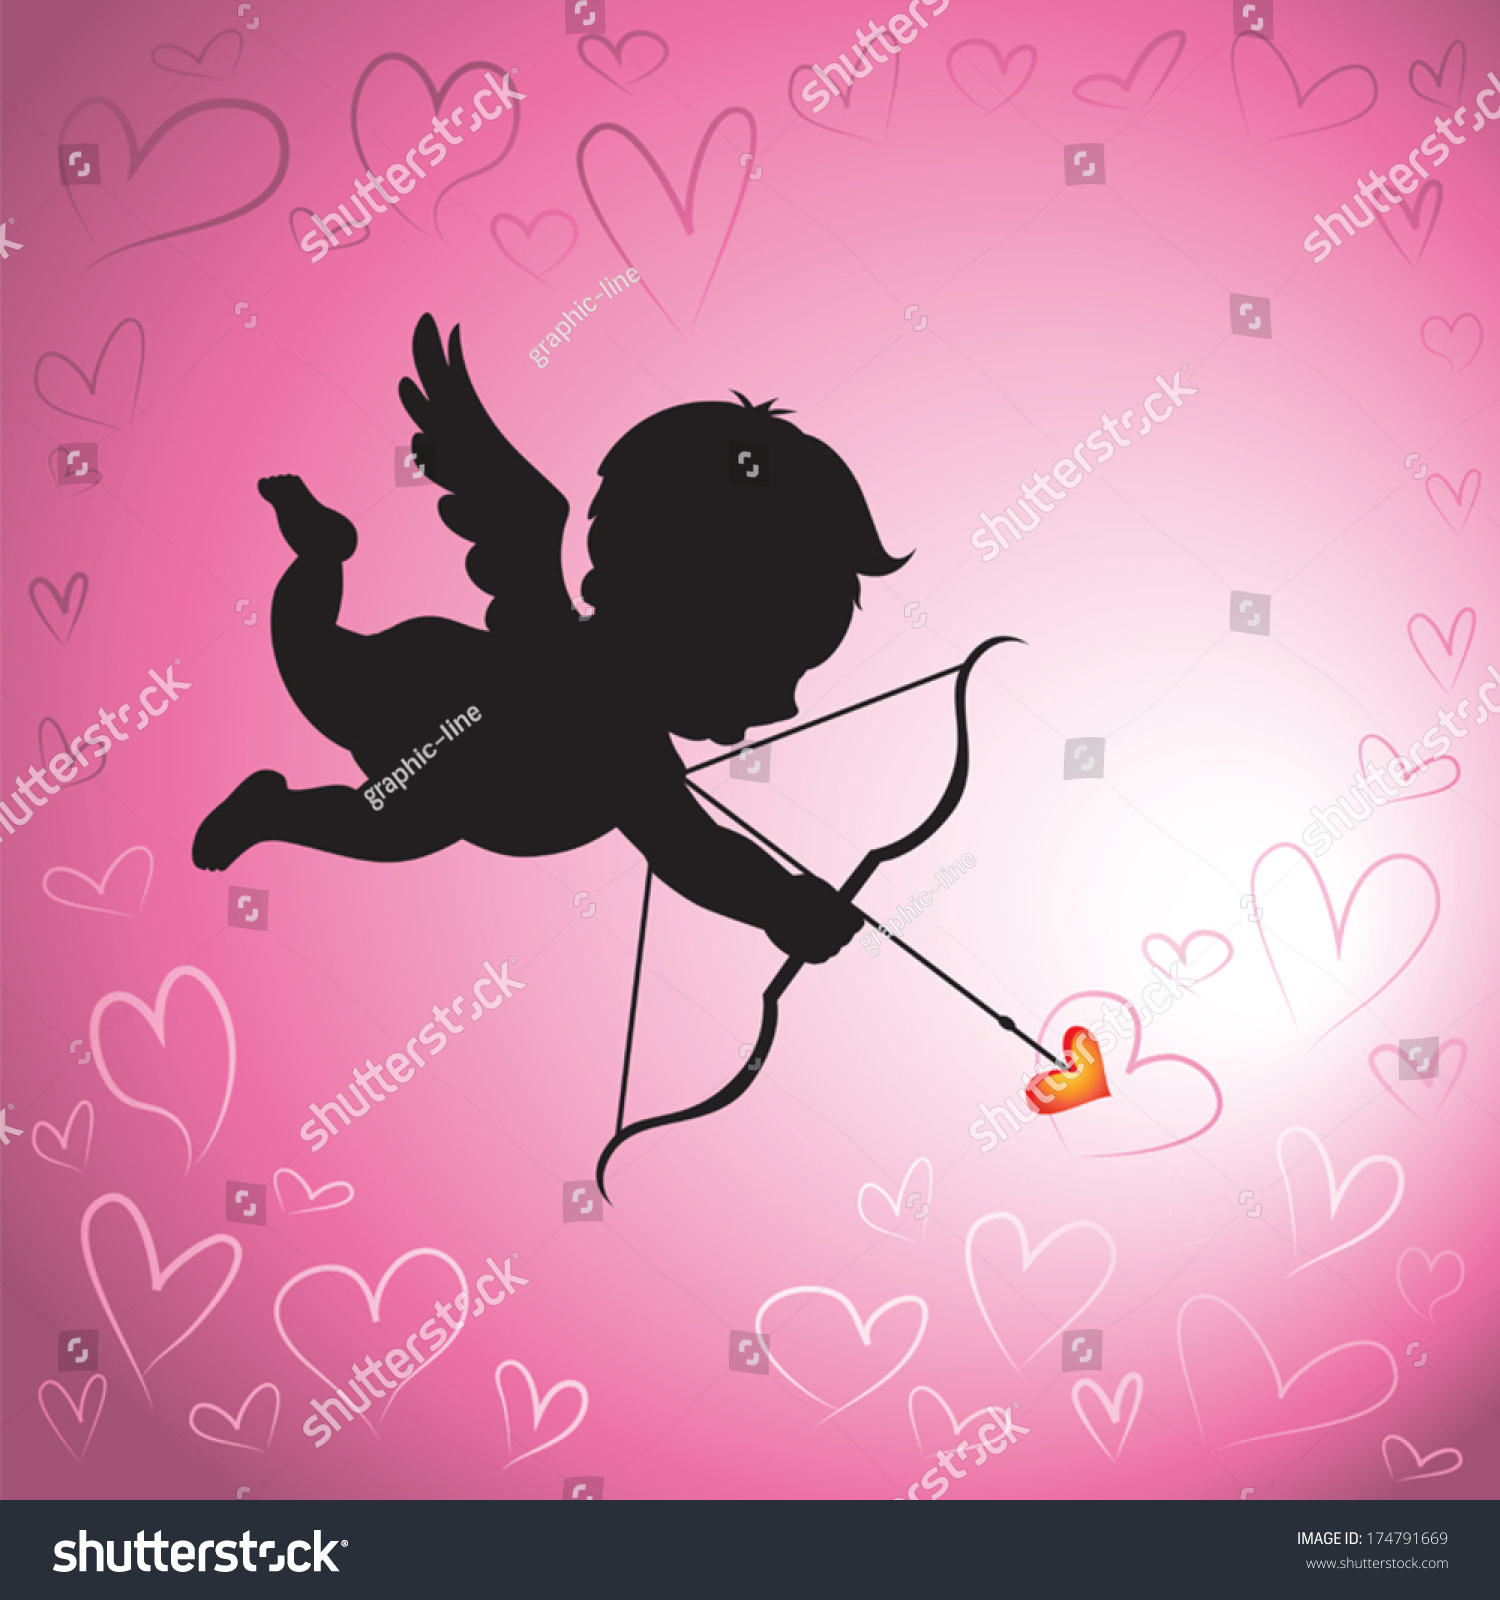 Cupid Love Vector Illustration Cupid Silhouette Stock Vector 174791669 Shutterstock 8975